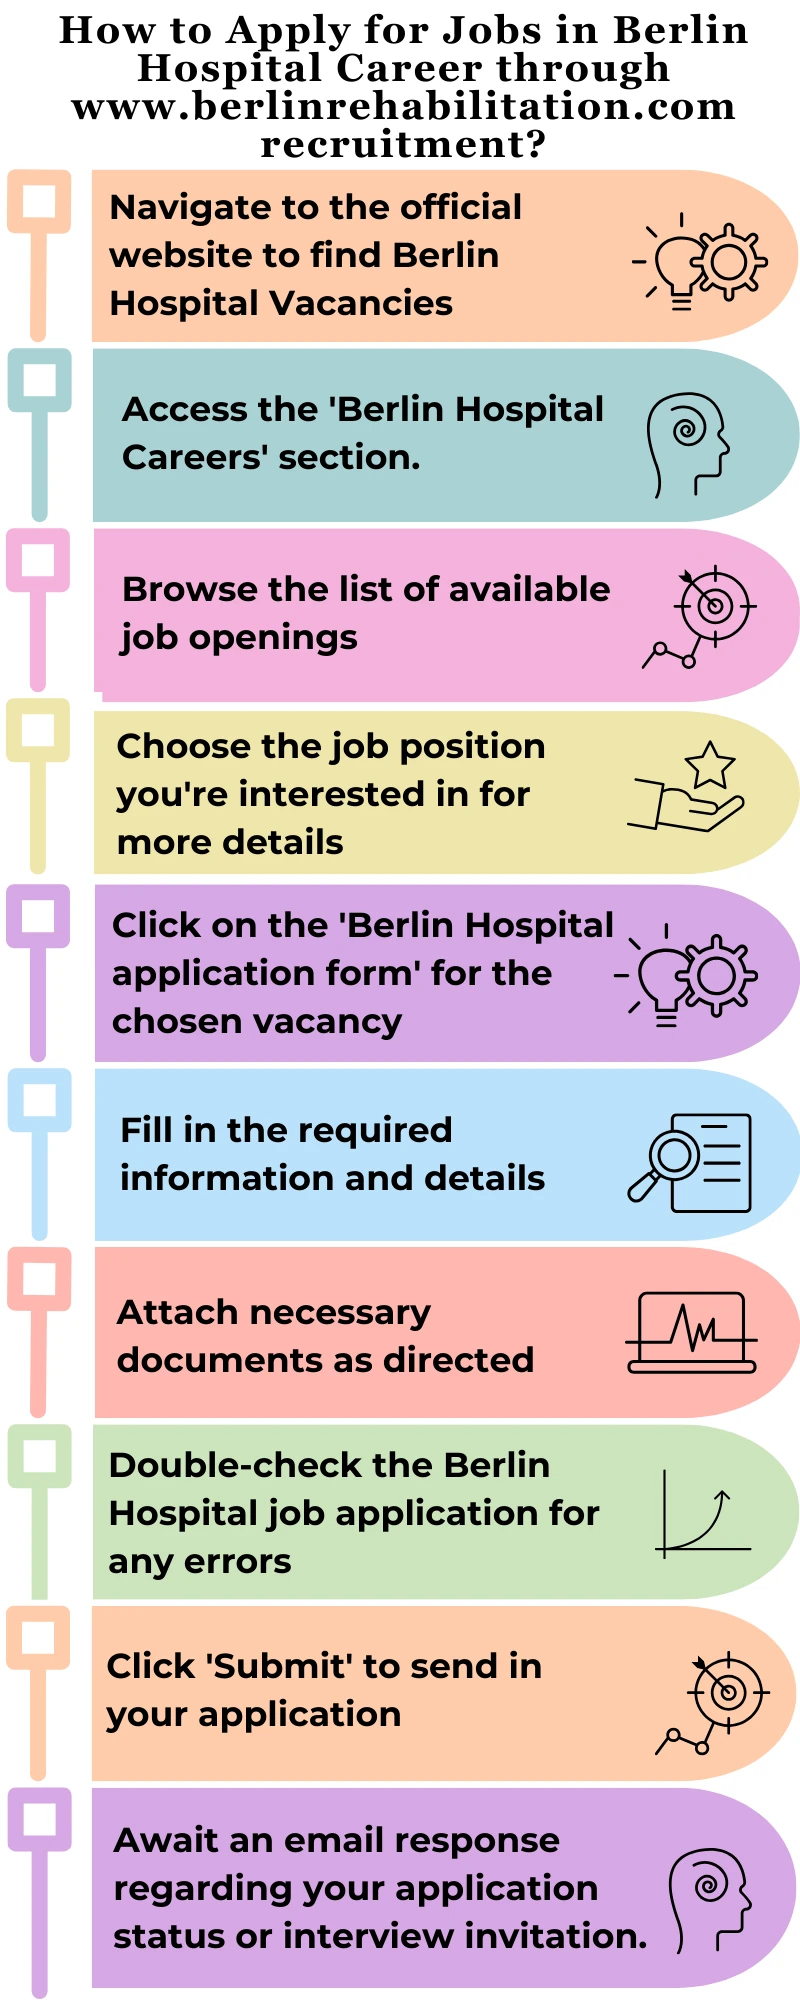 How to Apply for Jobs in Berlin Hospital Career through www.berlinrehabilitation.com recruitment?